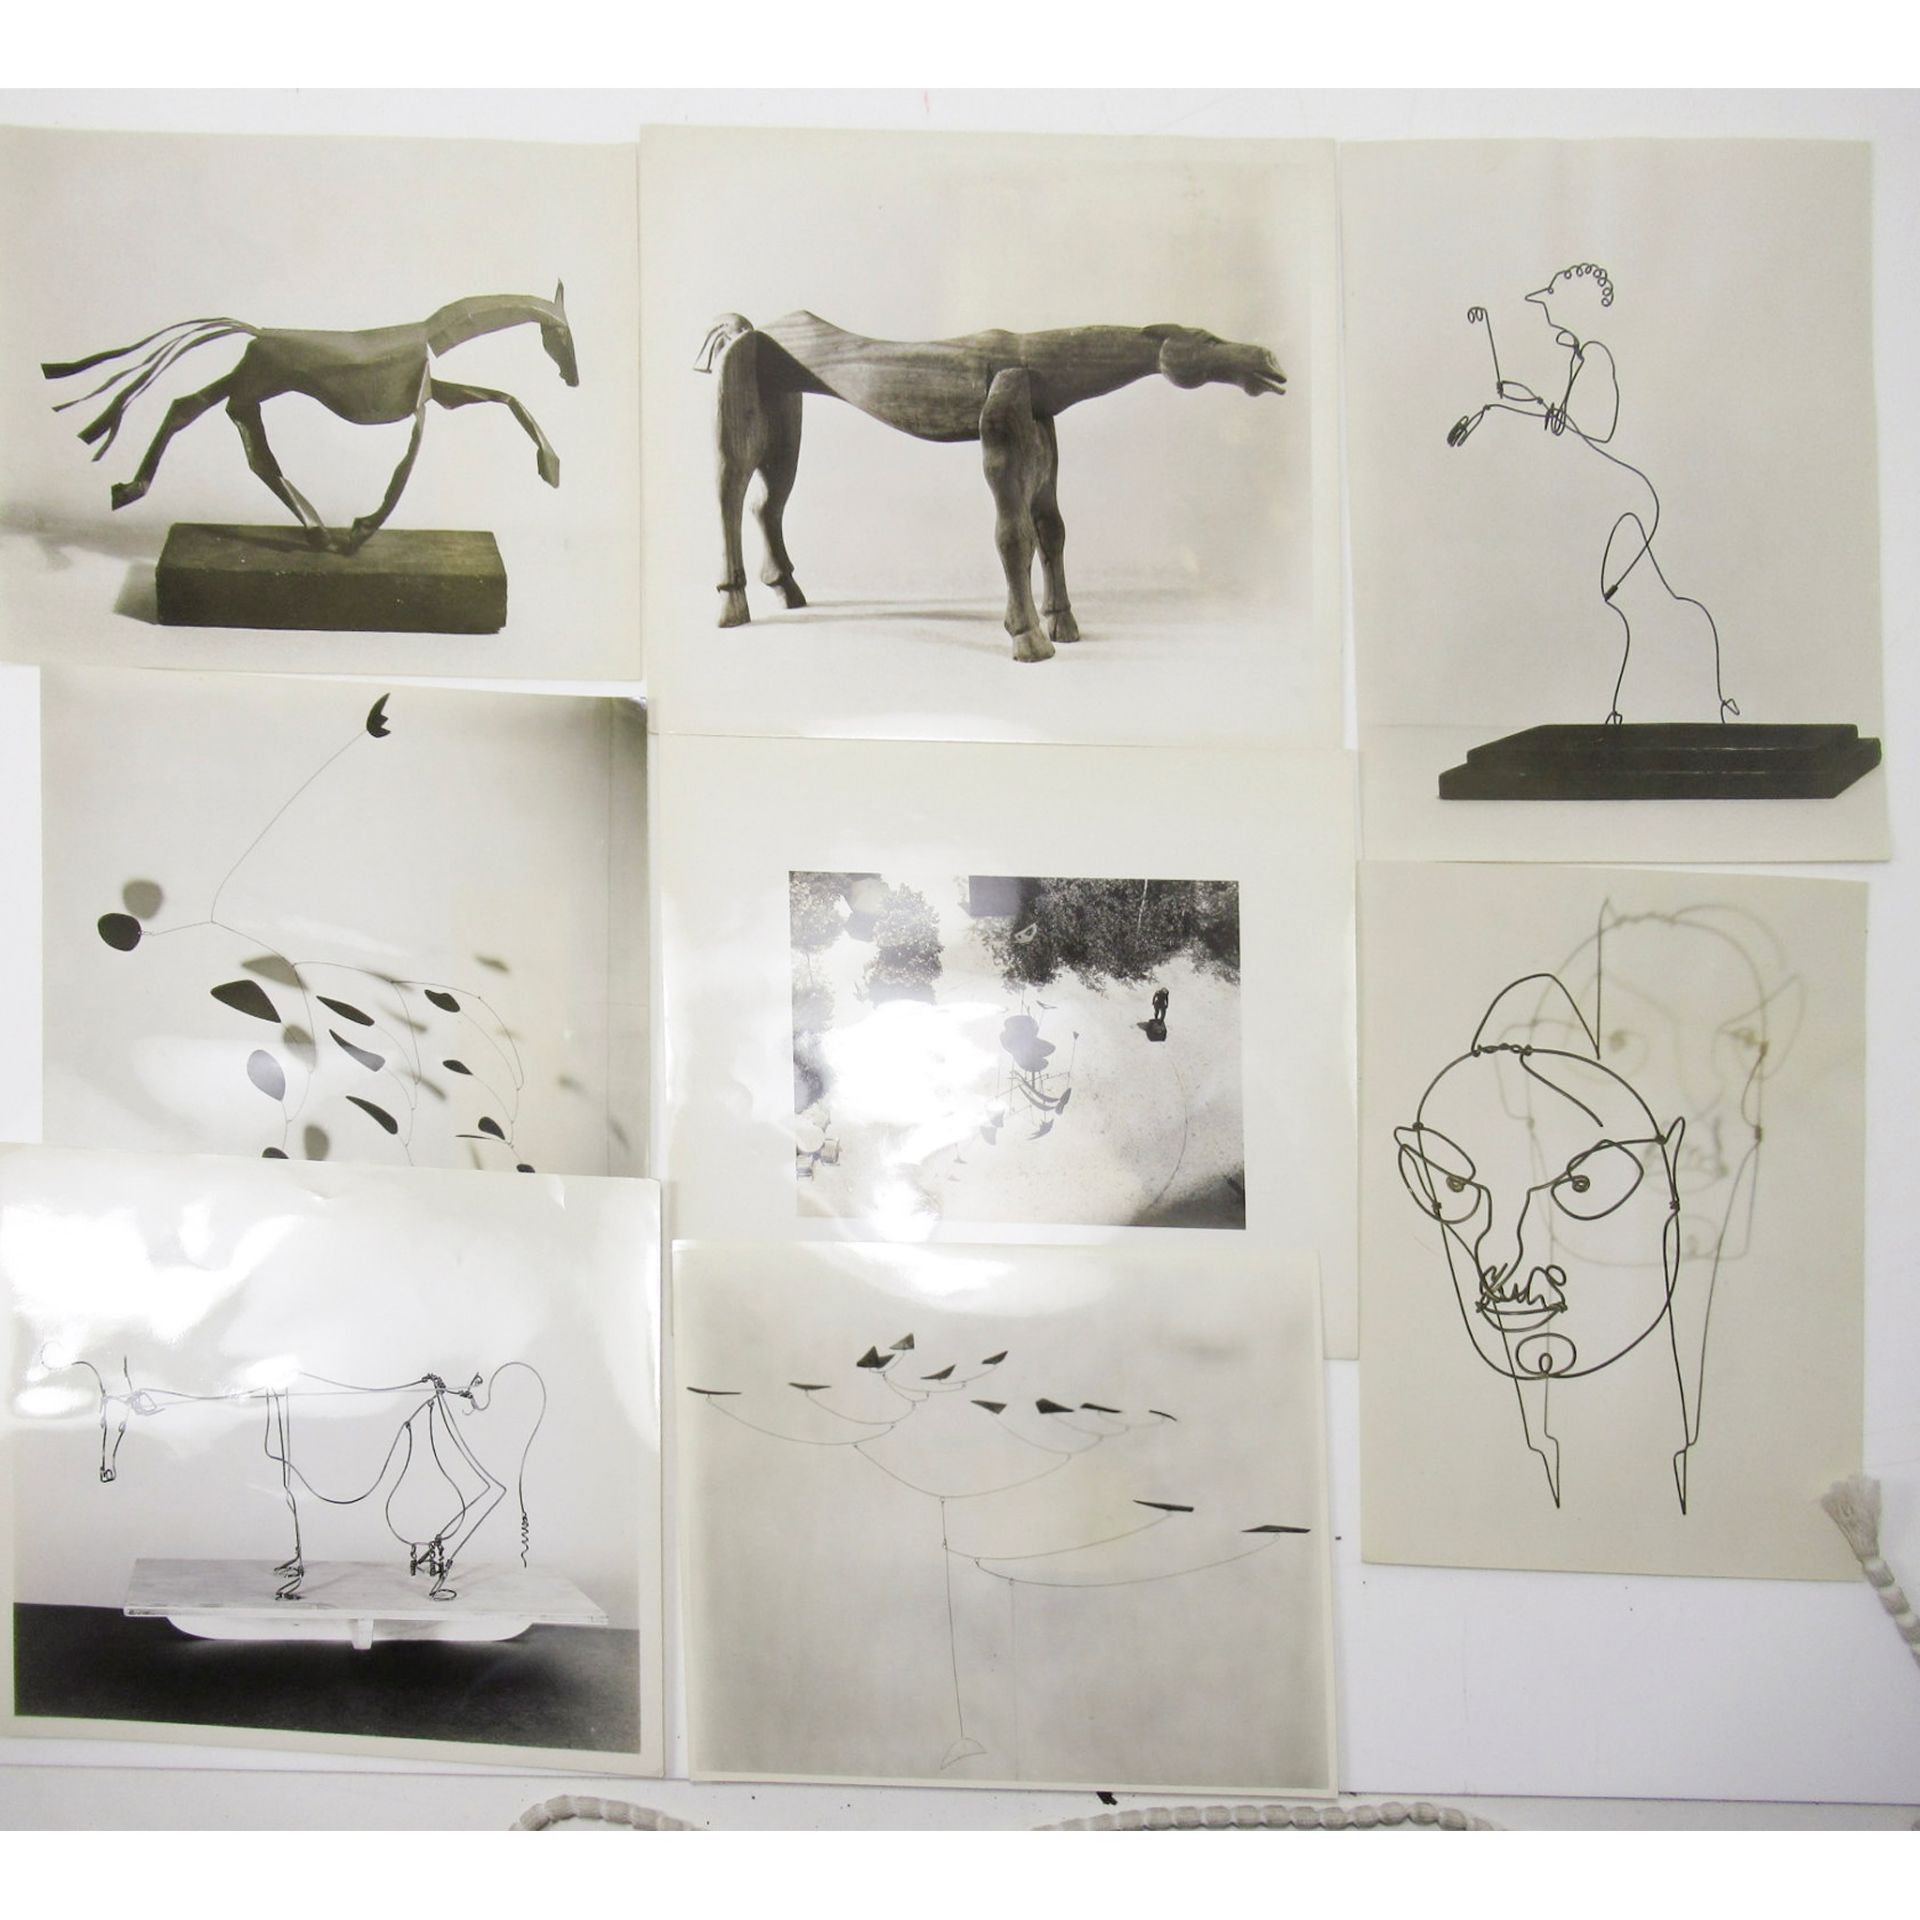 Alexander Calder A selection of photographs - Image 2 of 2